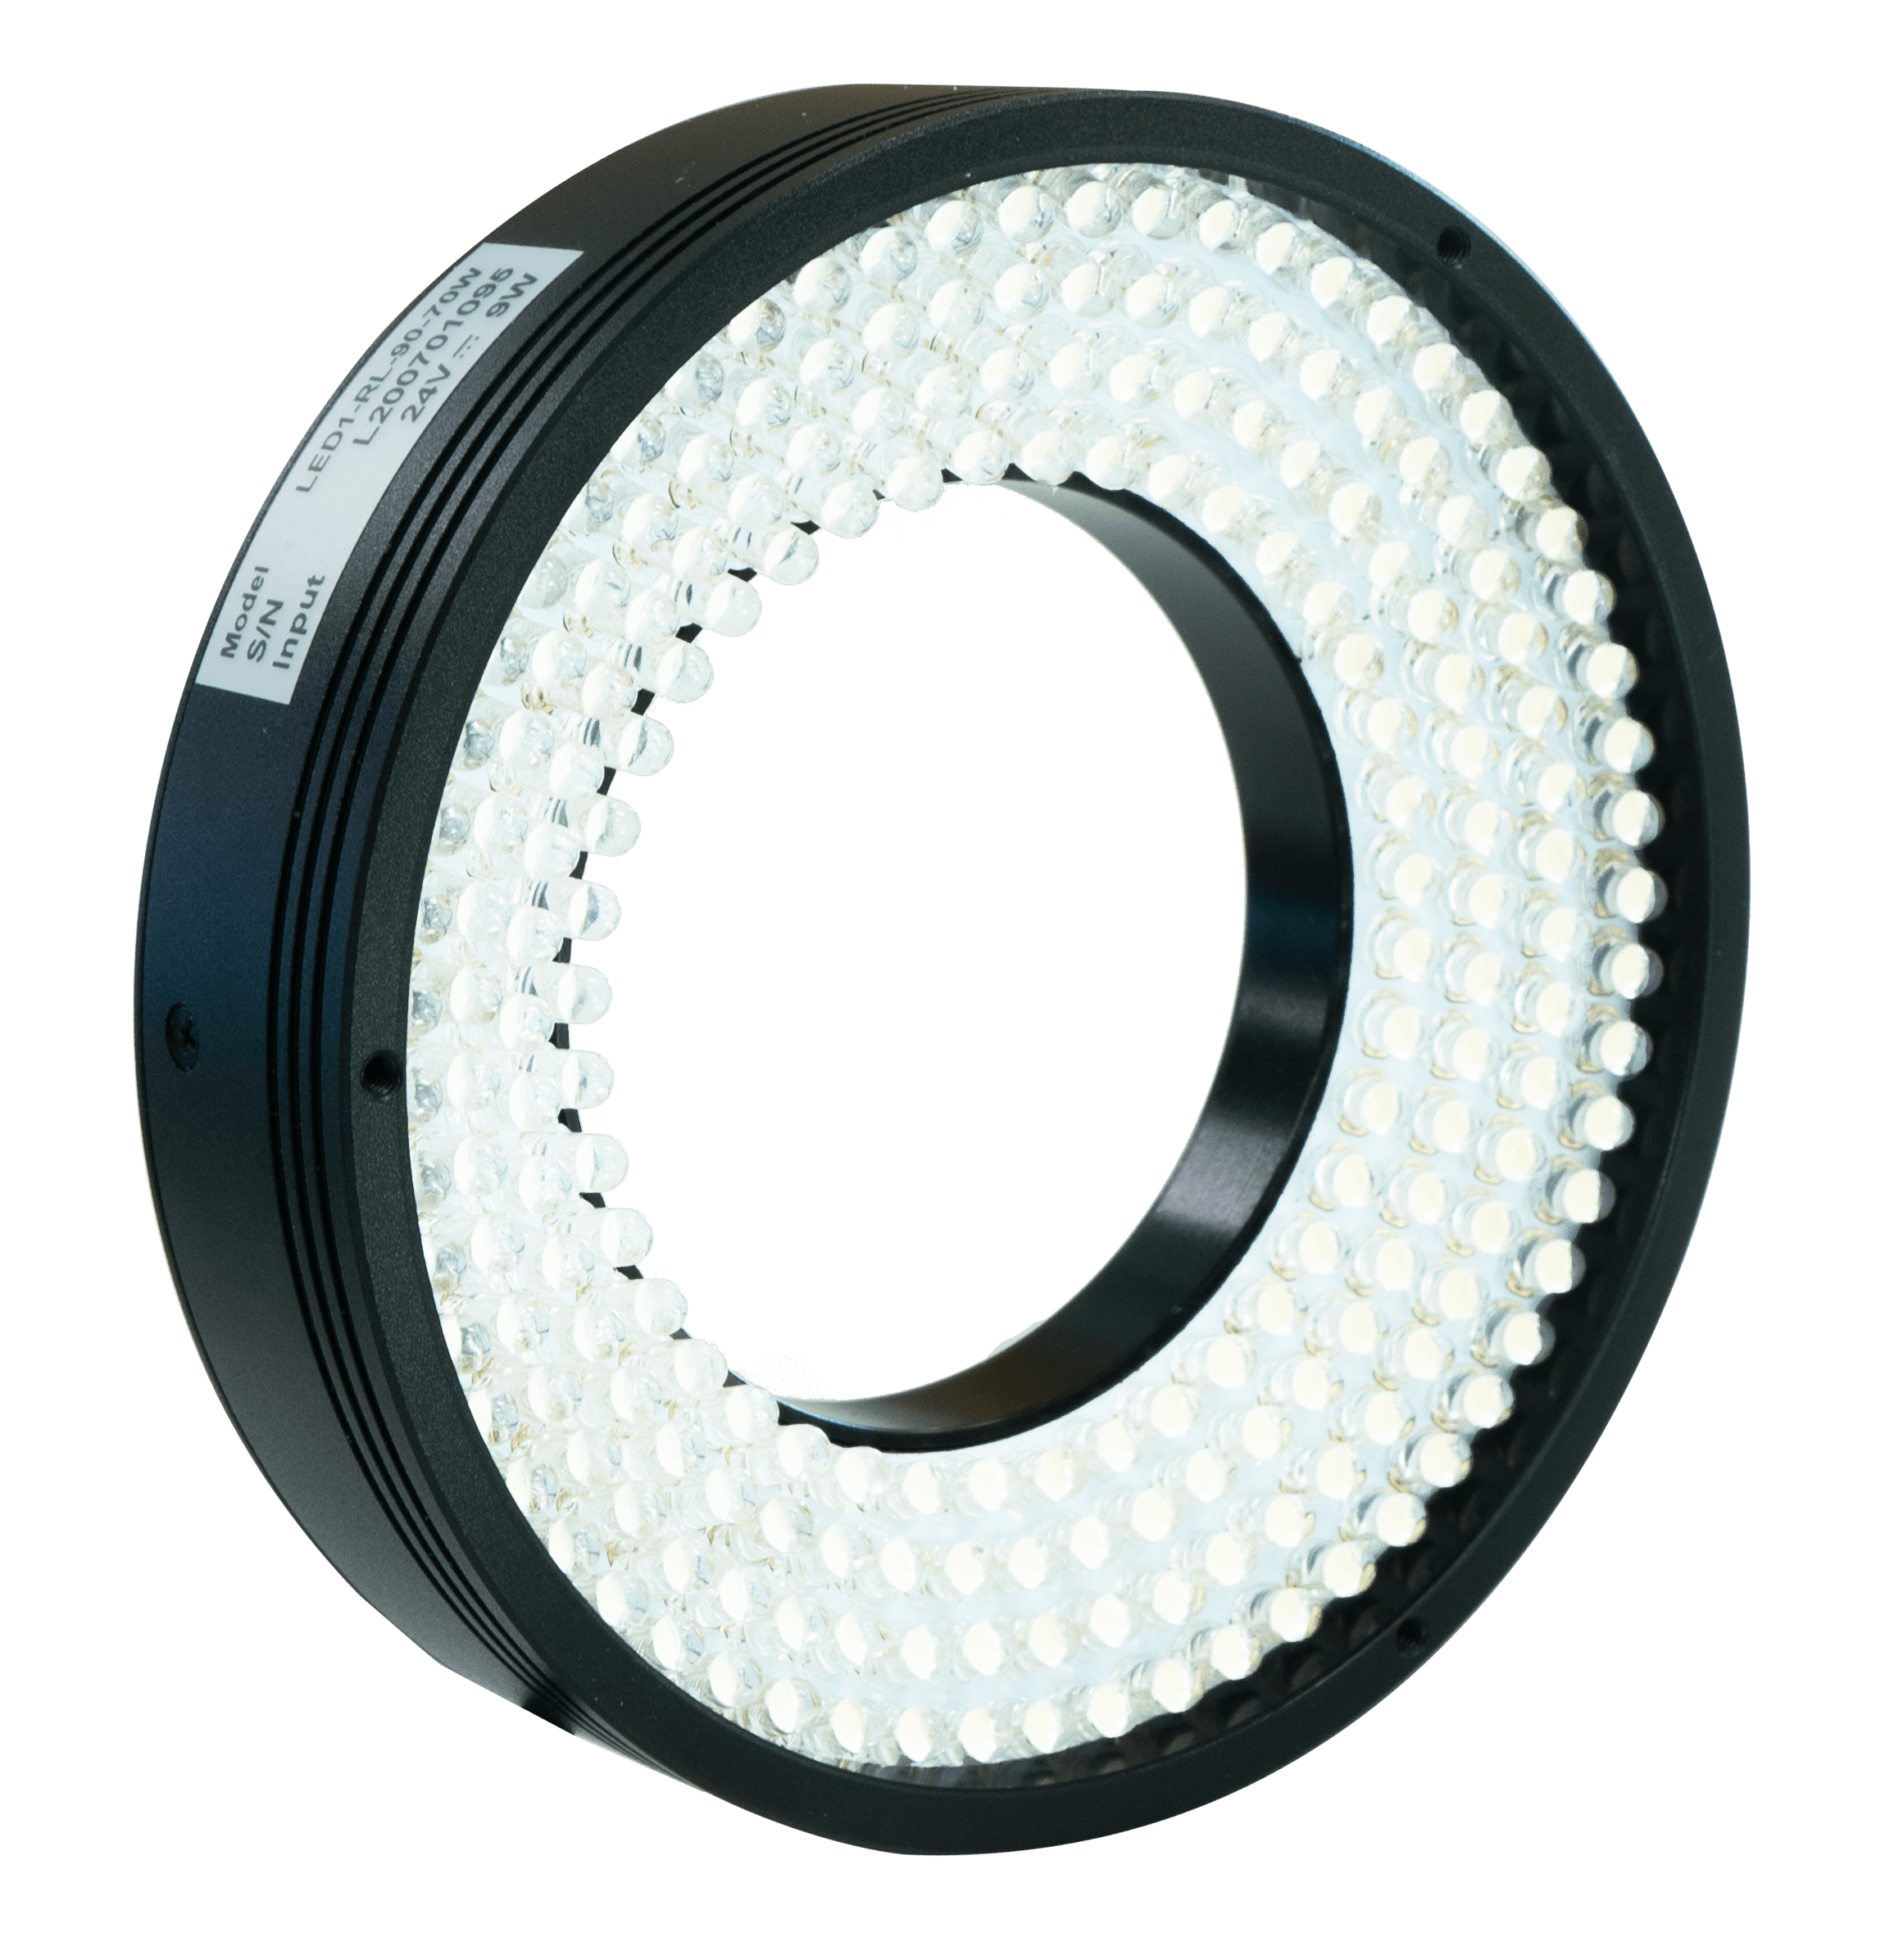 AmScope Microscope Parts & Accessories Illuminators & Ring Lights